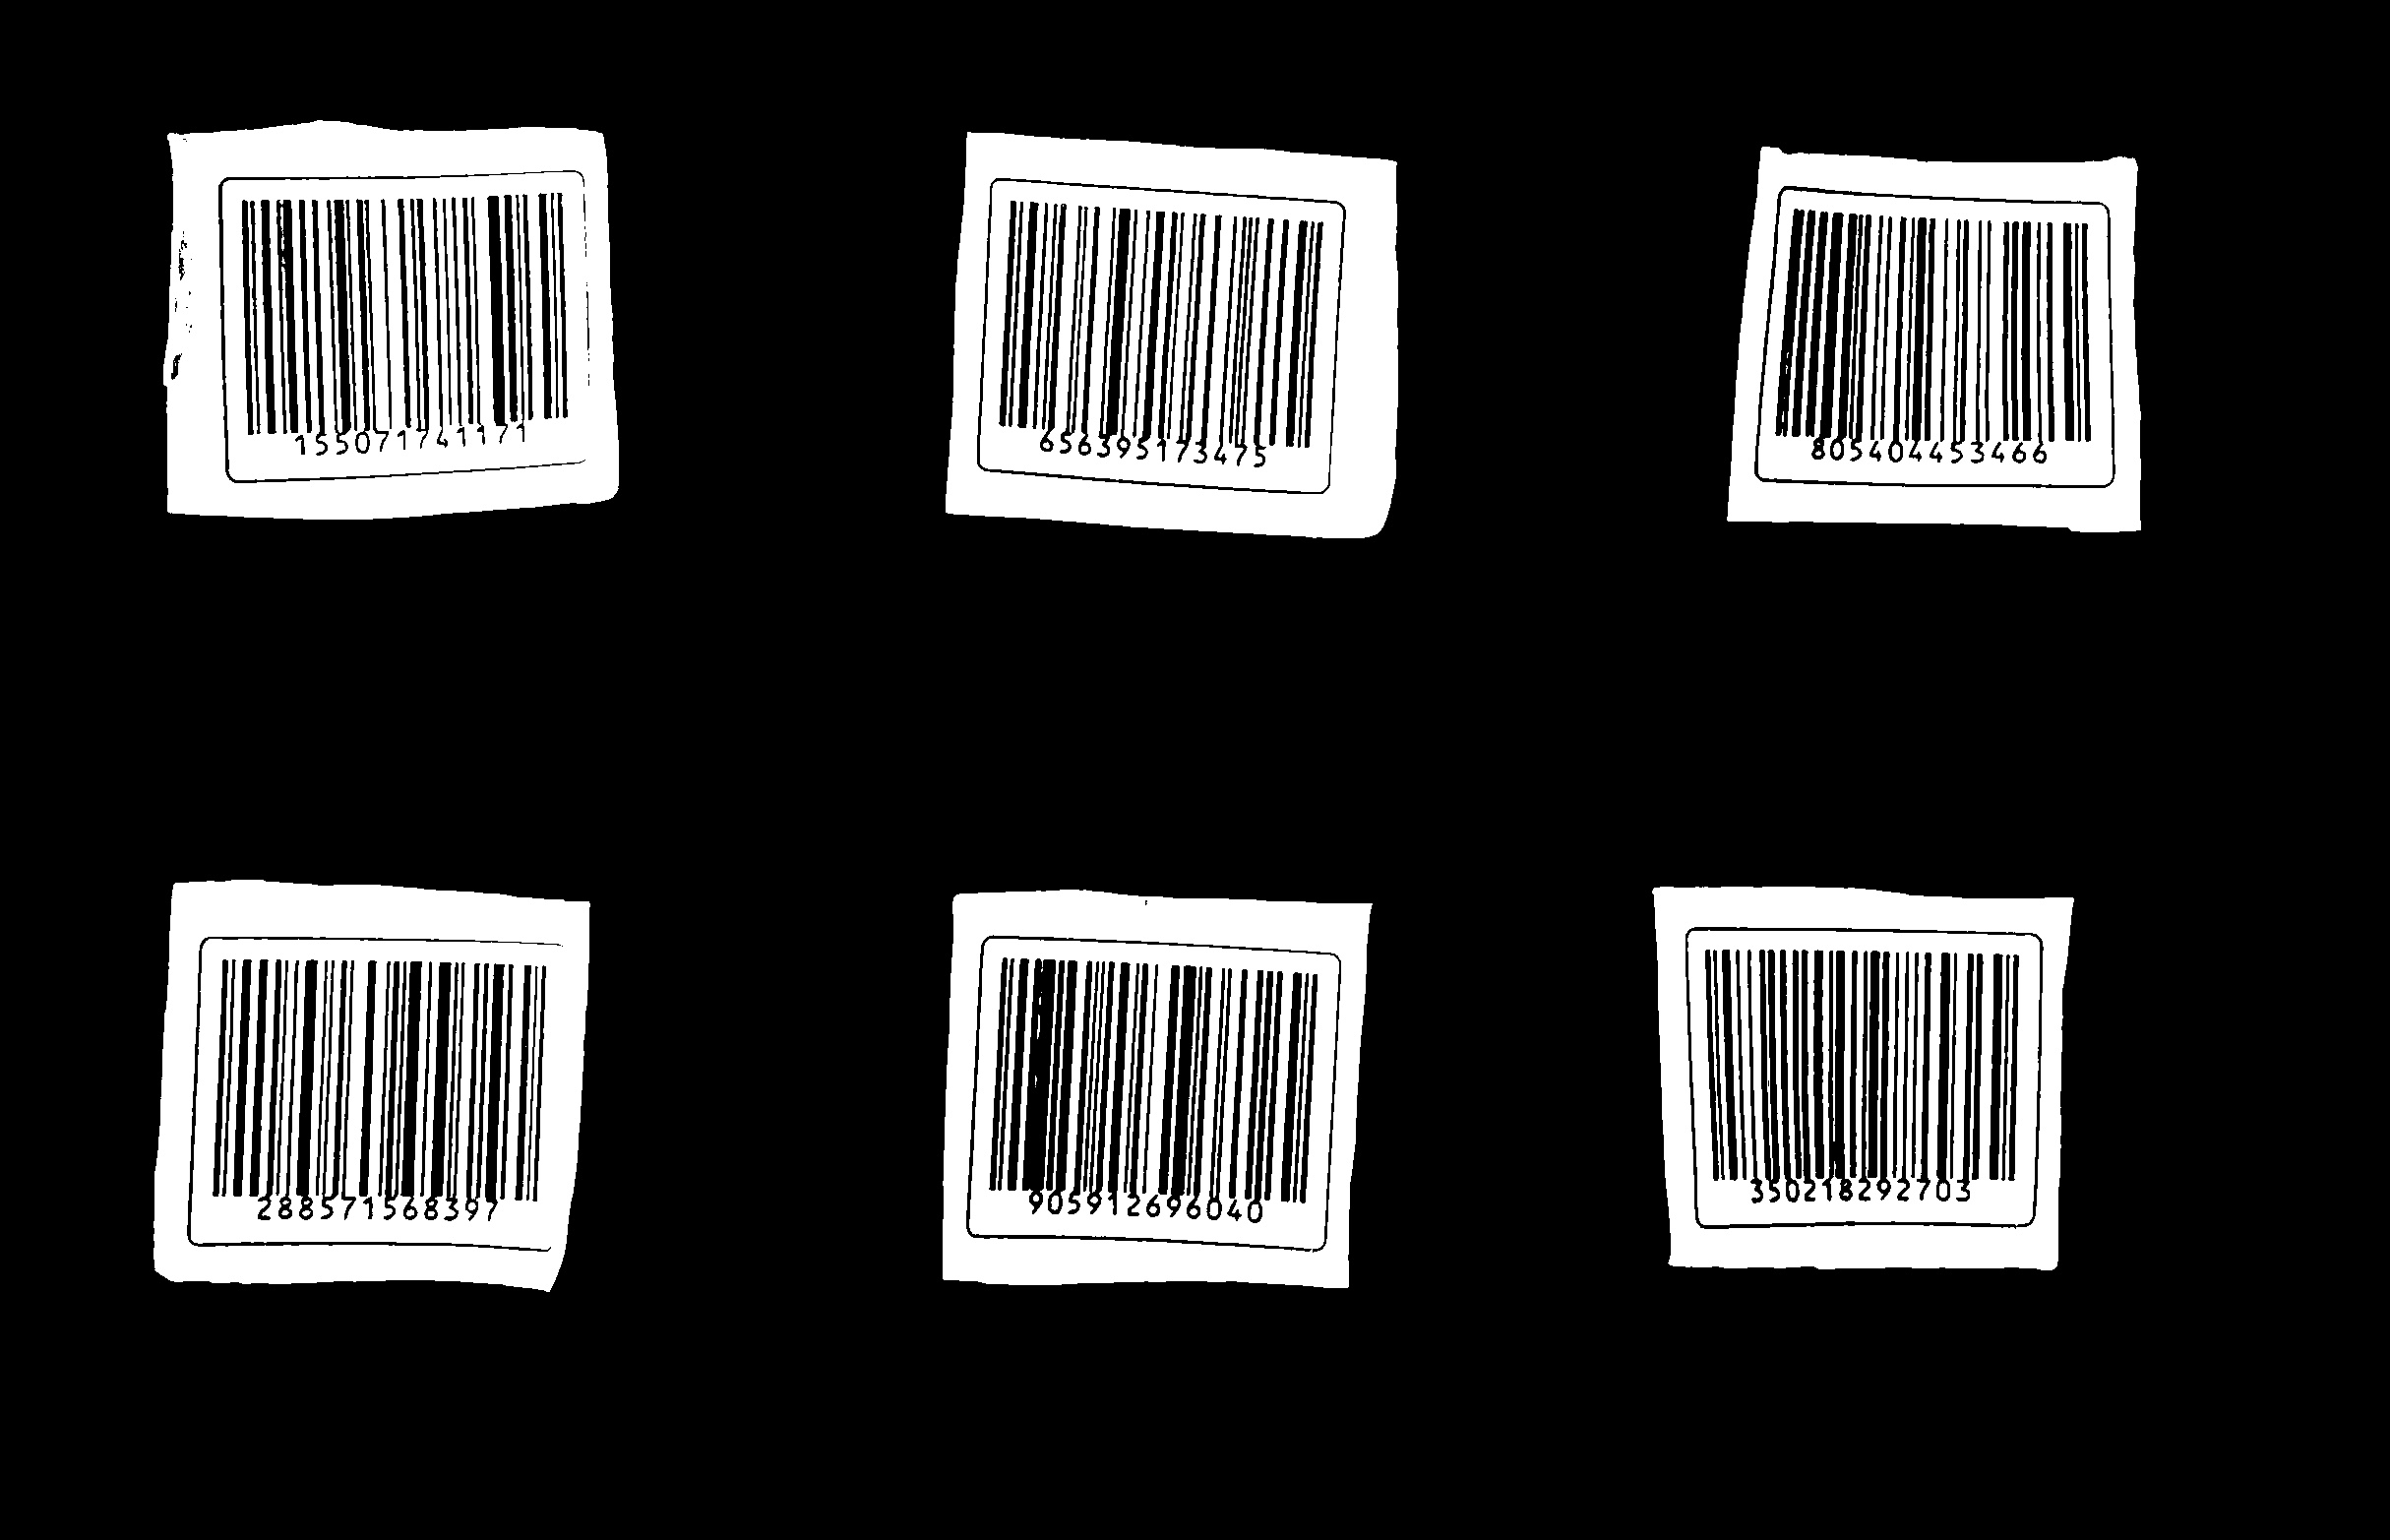 barcodes on labels thresh